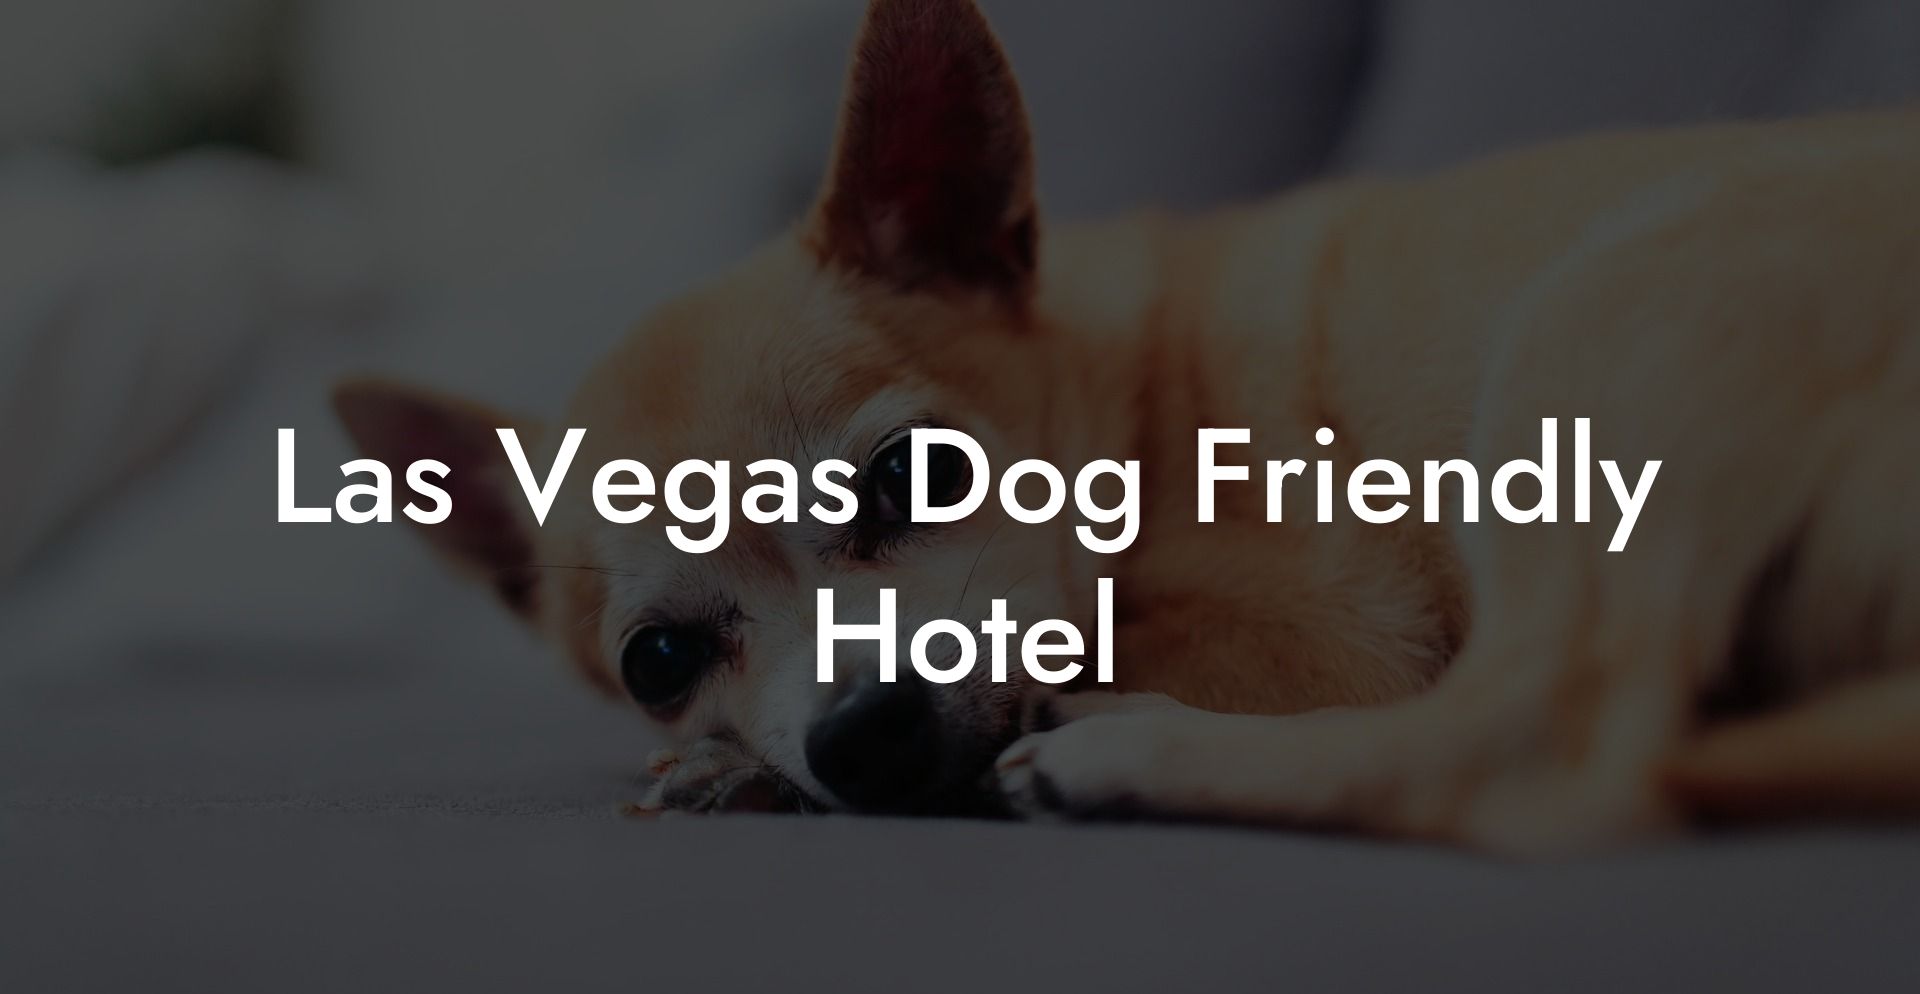 Las Vegas Dog Friendly Hotel